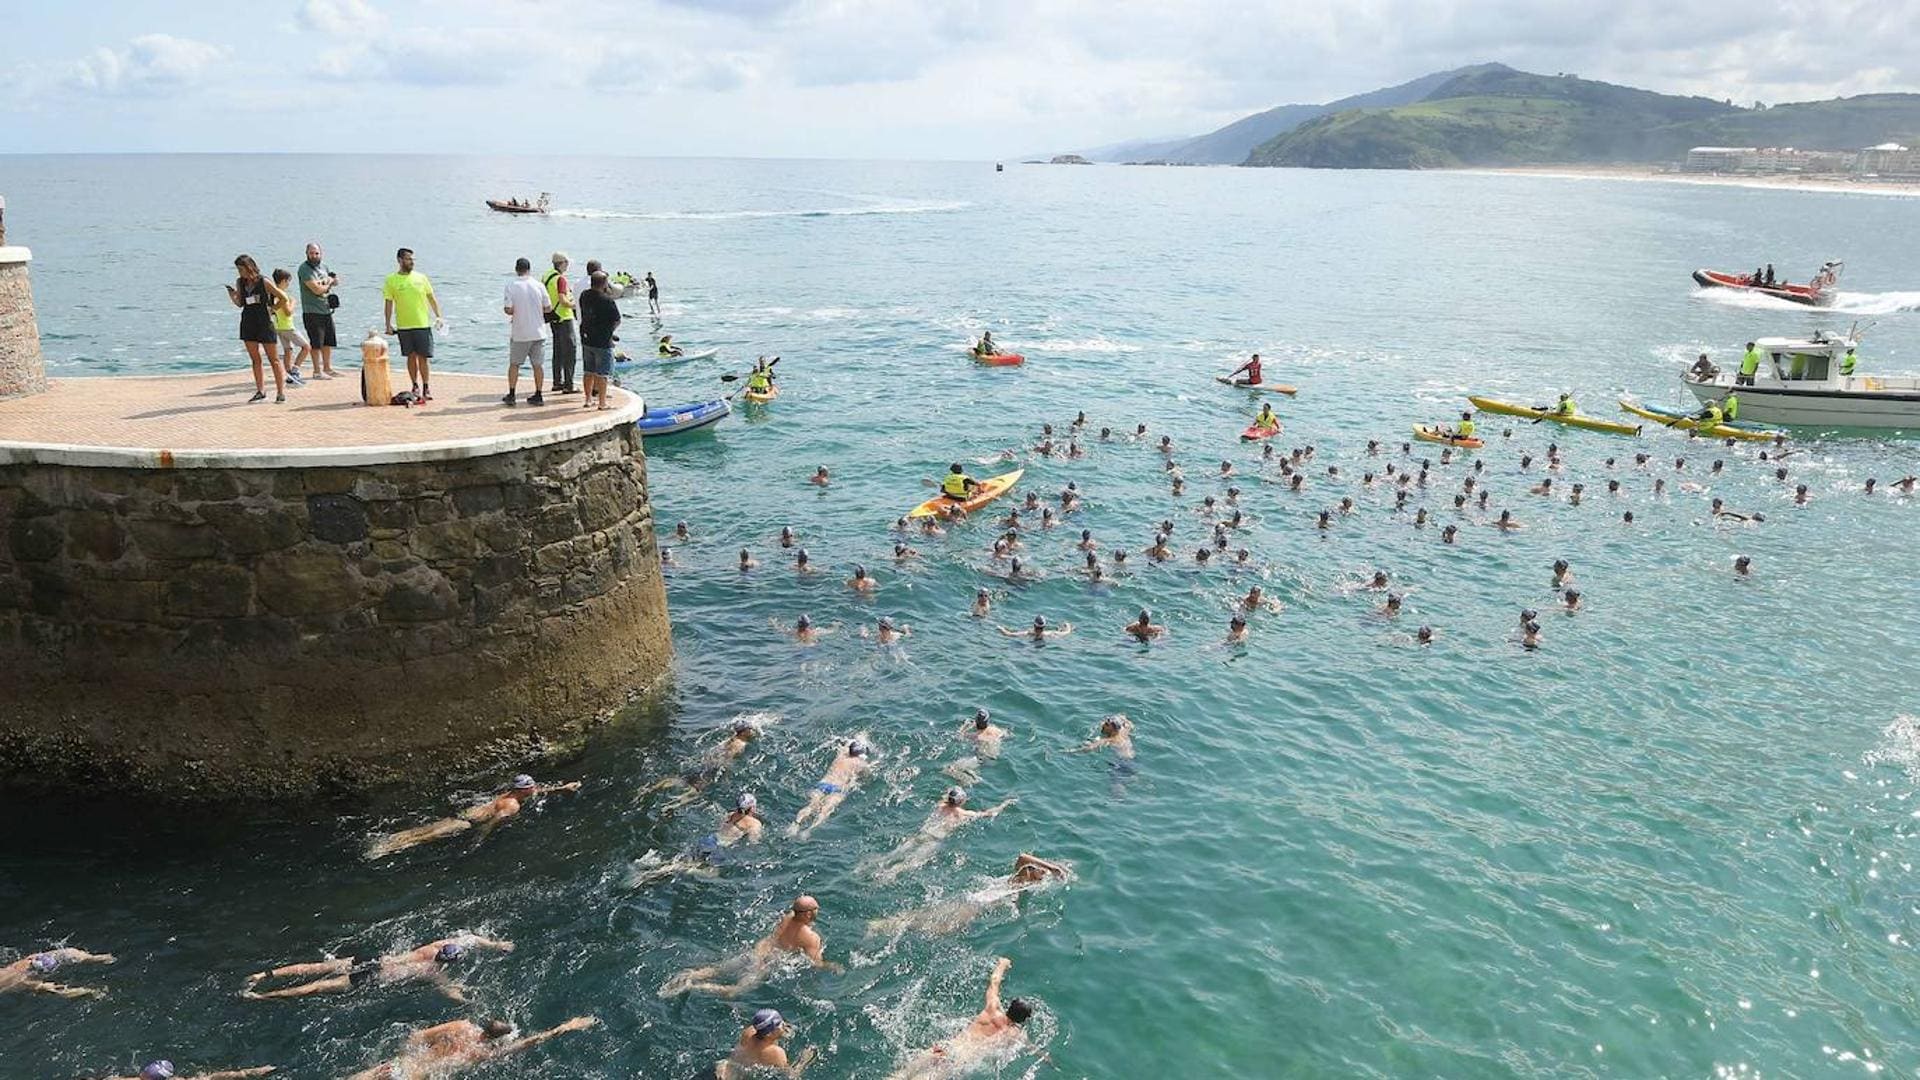 The elite of open water swimming will be in Zarautz in July